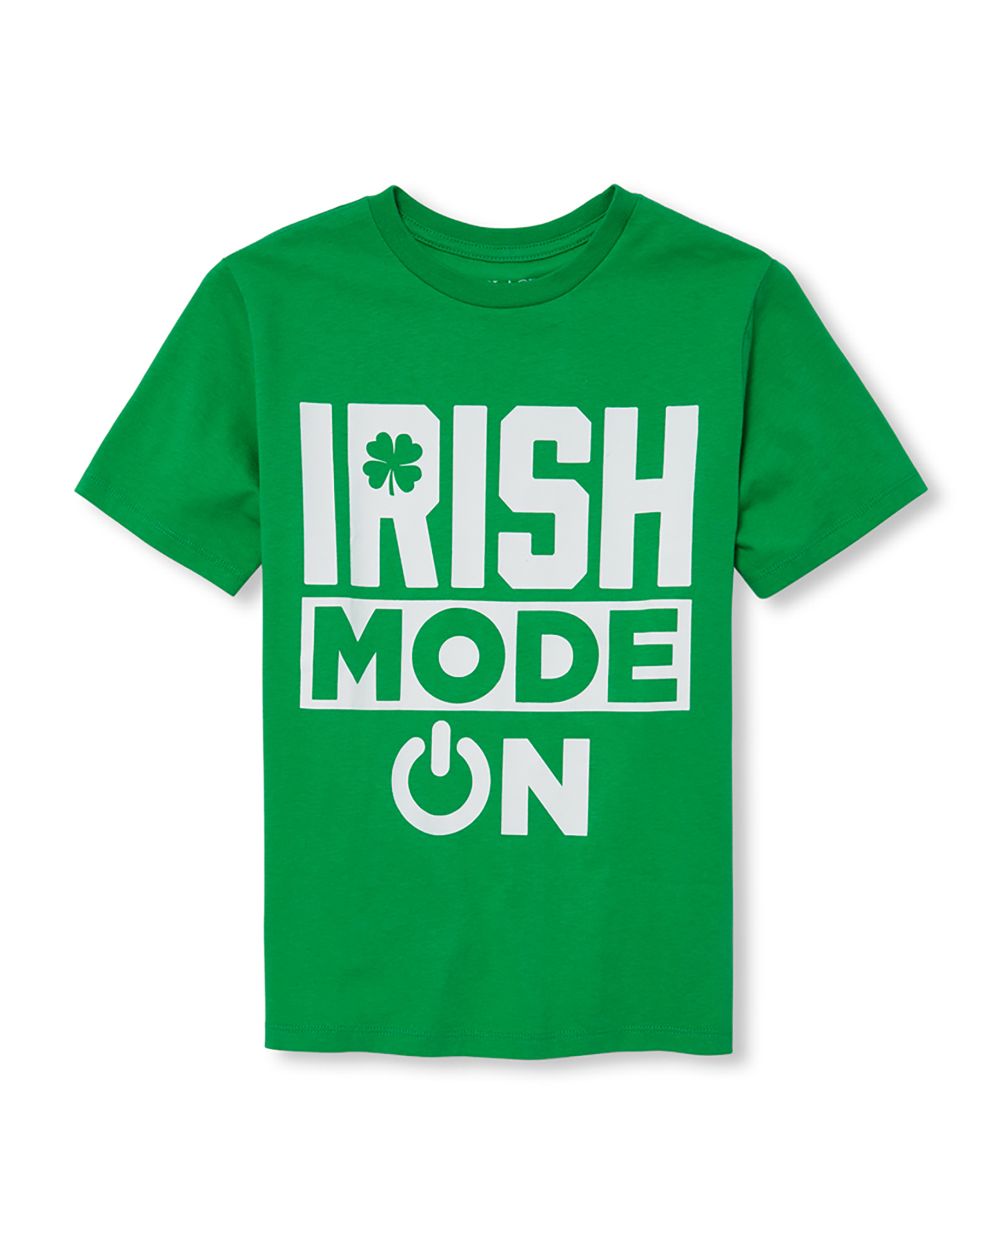 Boys St. Patrick's Day Short Sleeve 'Irish Mode' Graphic Tee